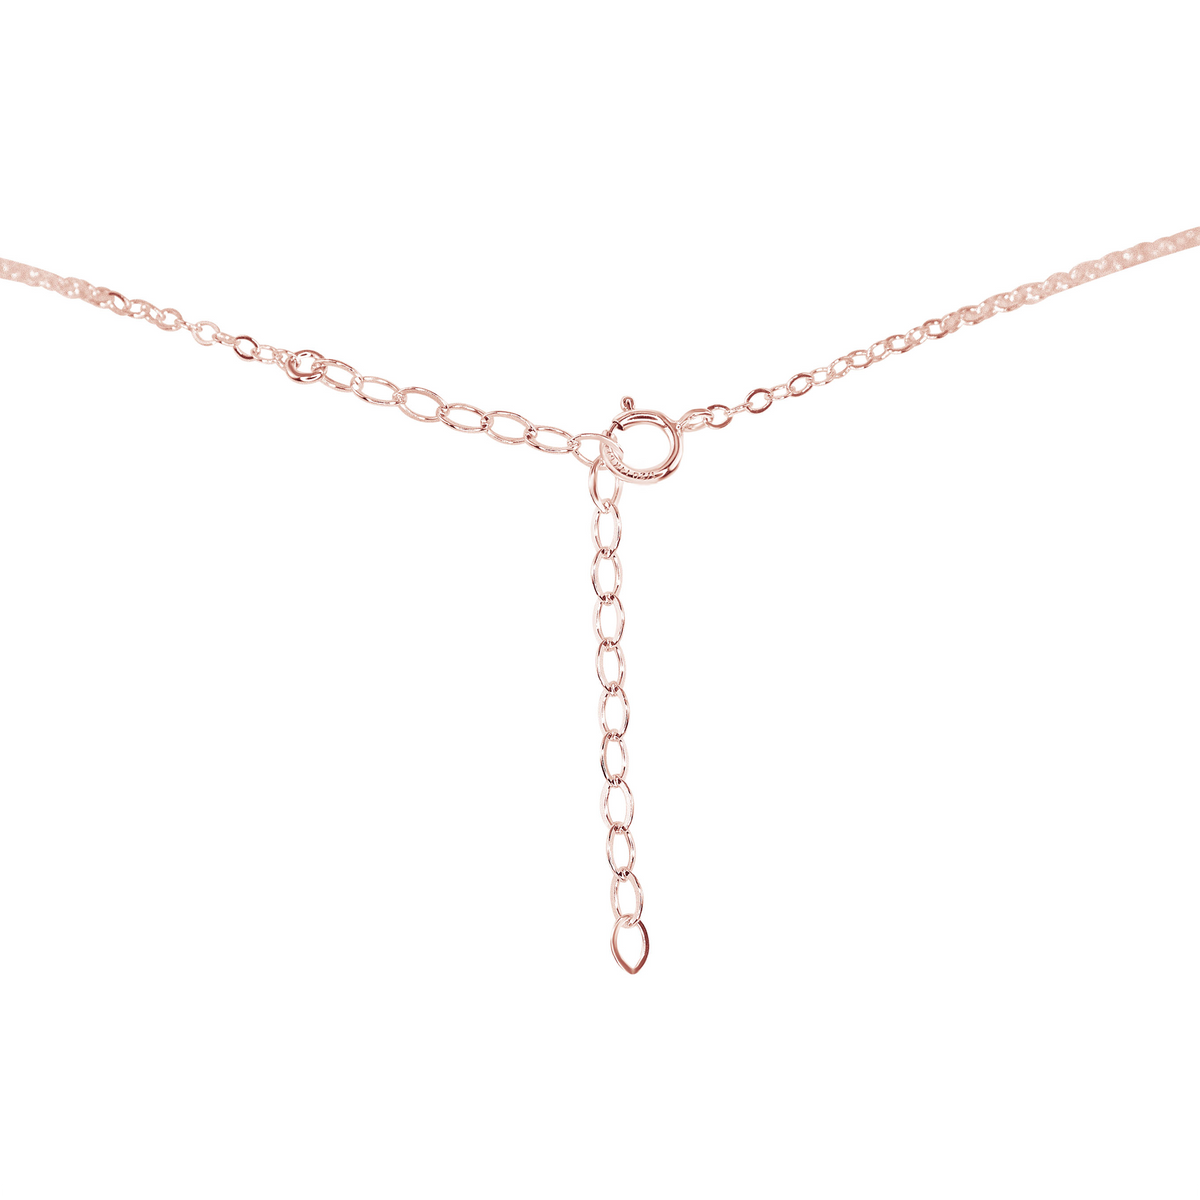 Tiny Raw Amethyst Pendant Necklace